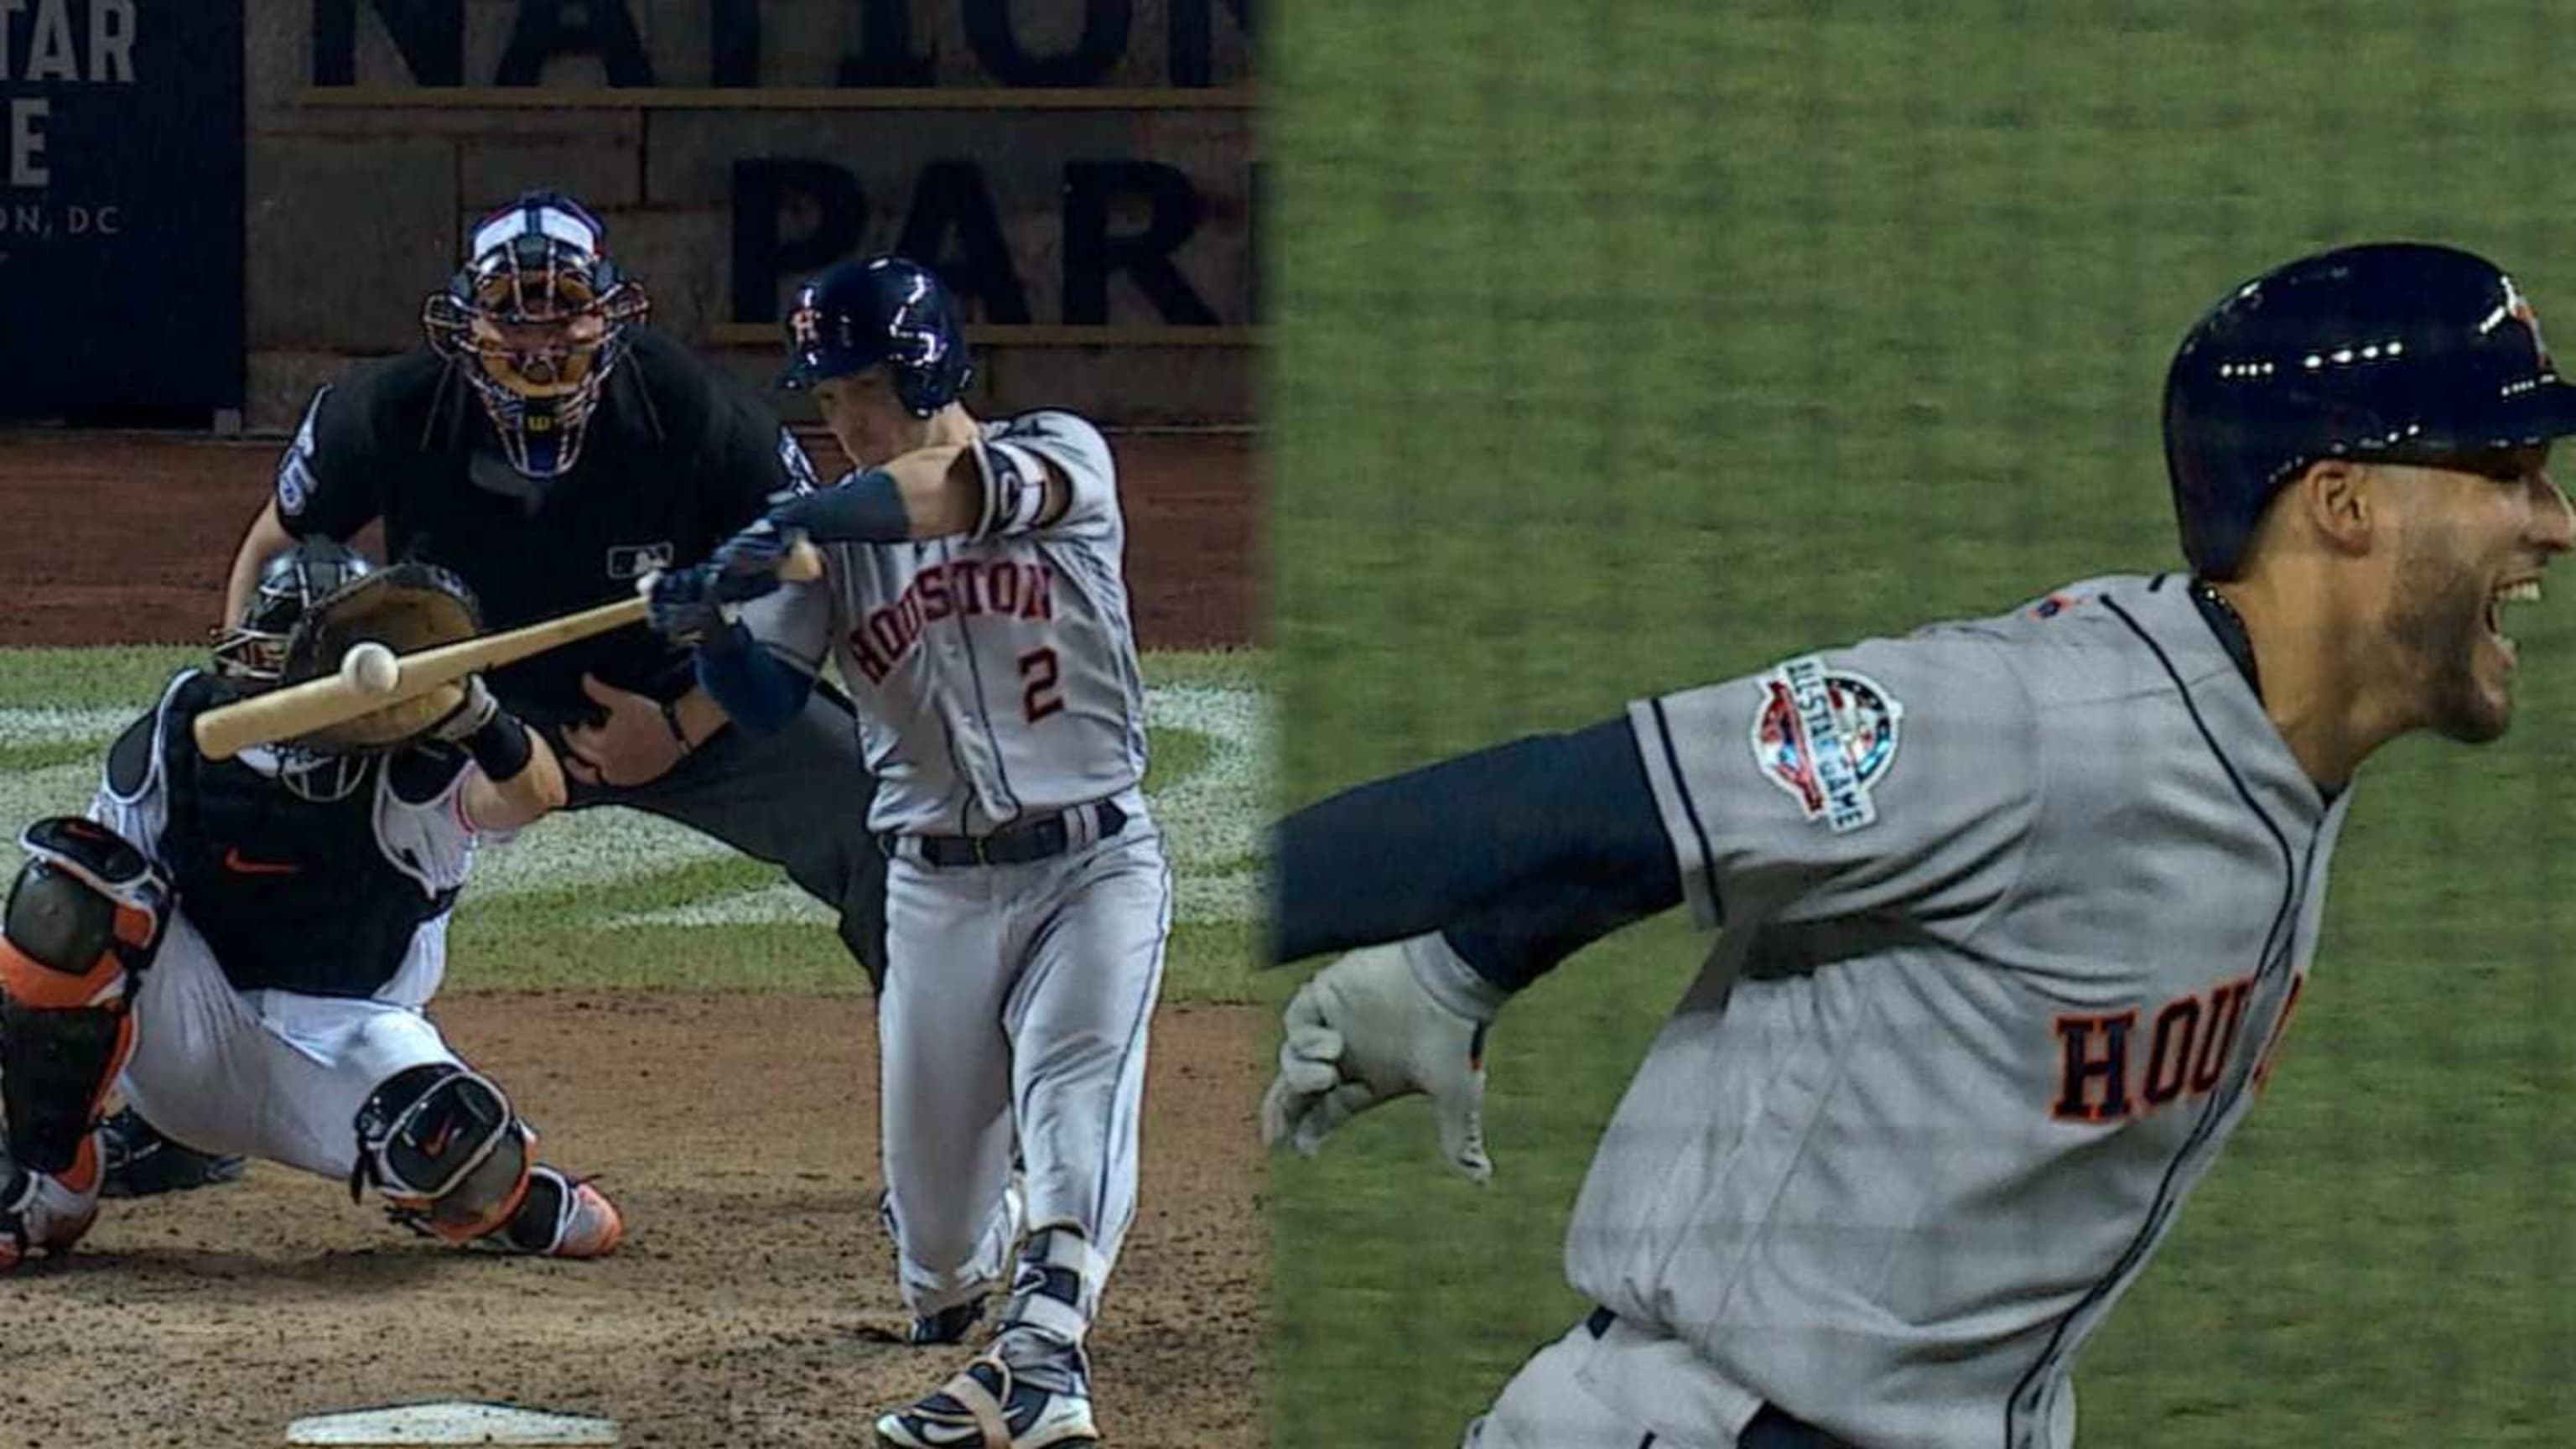 Photos: Houston Astros at 2018 MLB All-Star Game